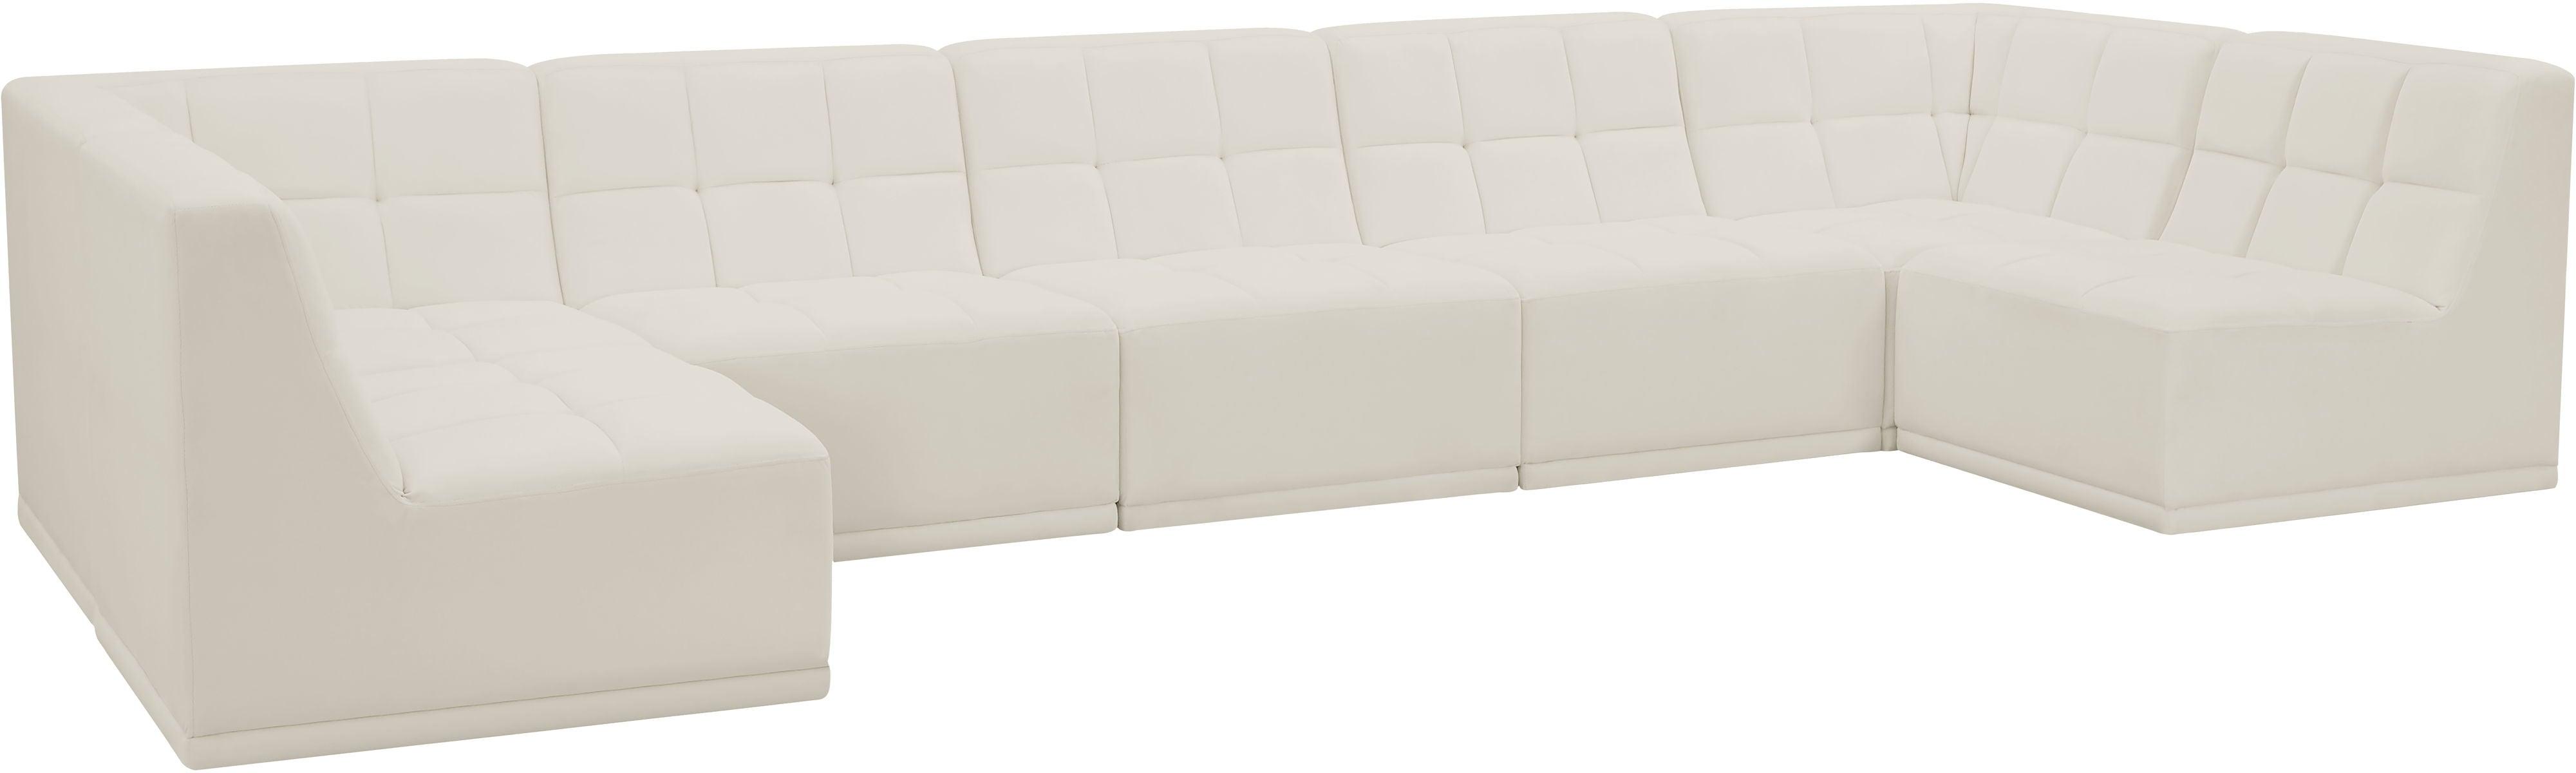 Meridian Furniture - Relax - Modular Sectional 7 Piece - Cream - 5th Avenue Furniture